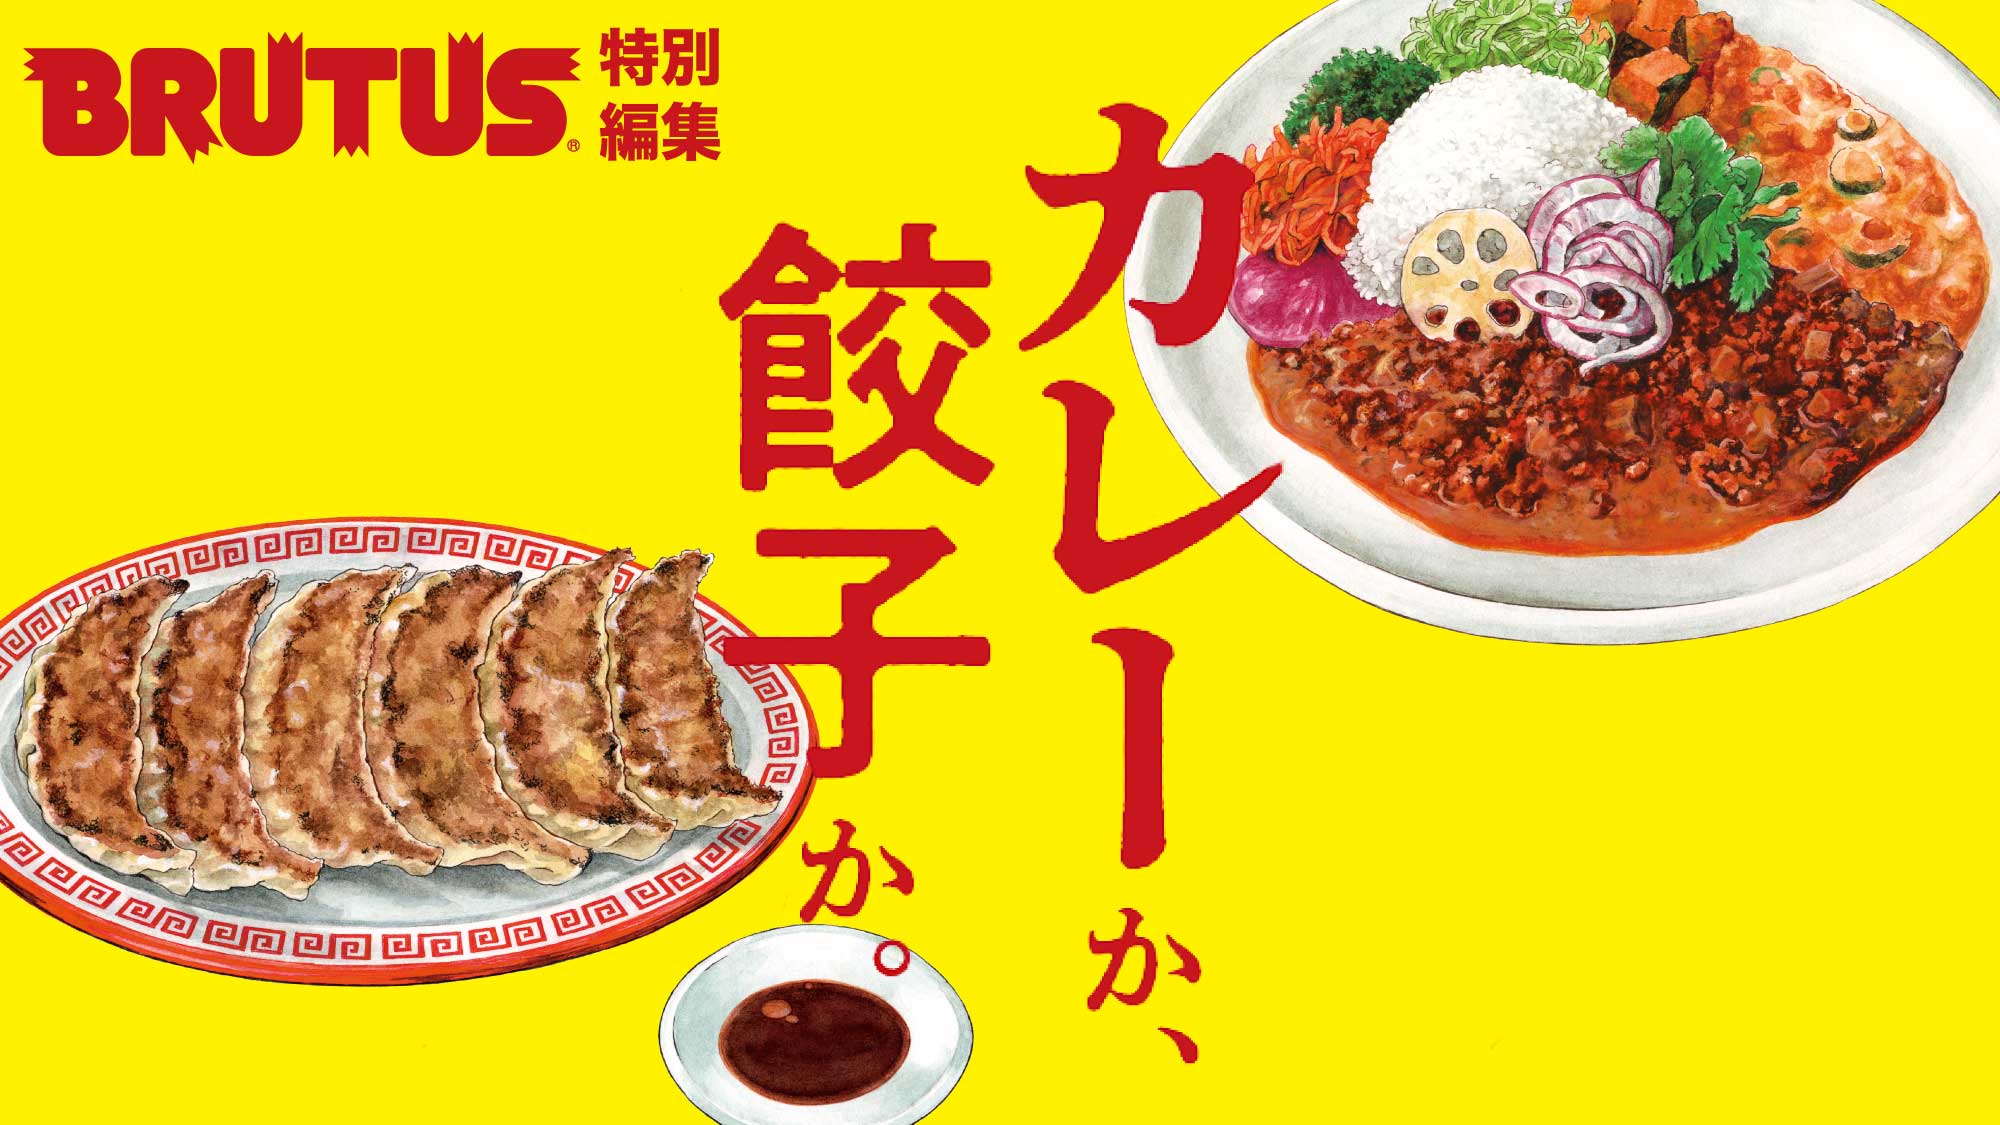 BRUTUS特別編集『カレーか、餃子か。』7月6日に発売 | ブルータス| BRUTUS.jp